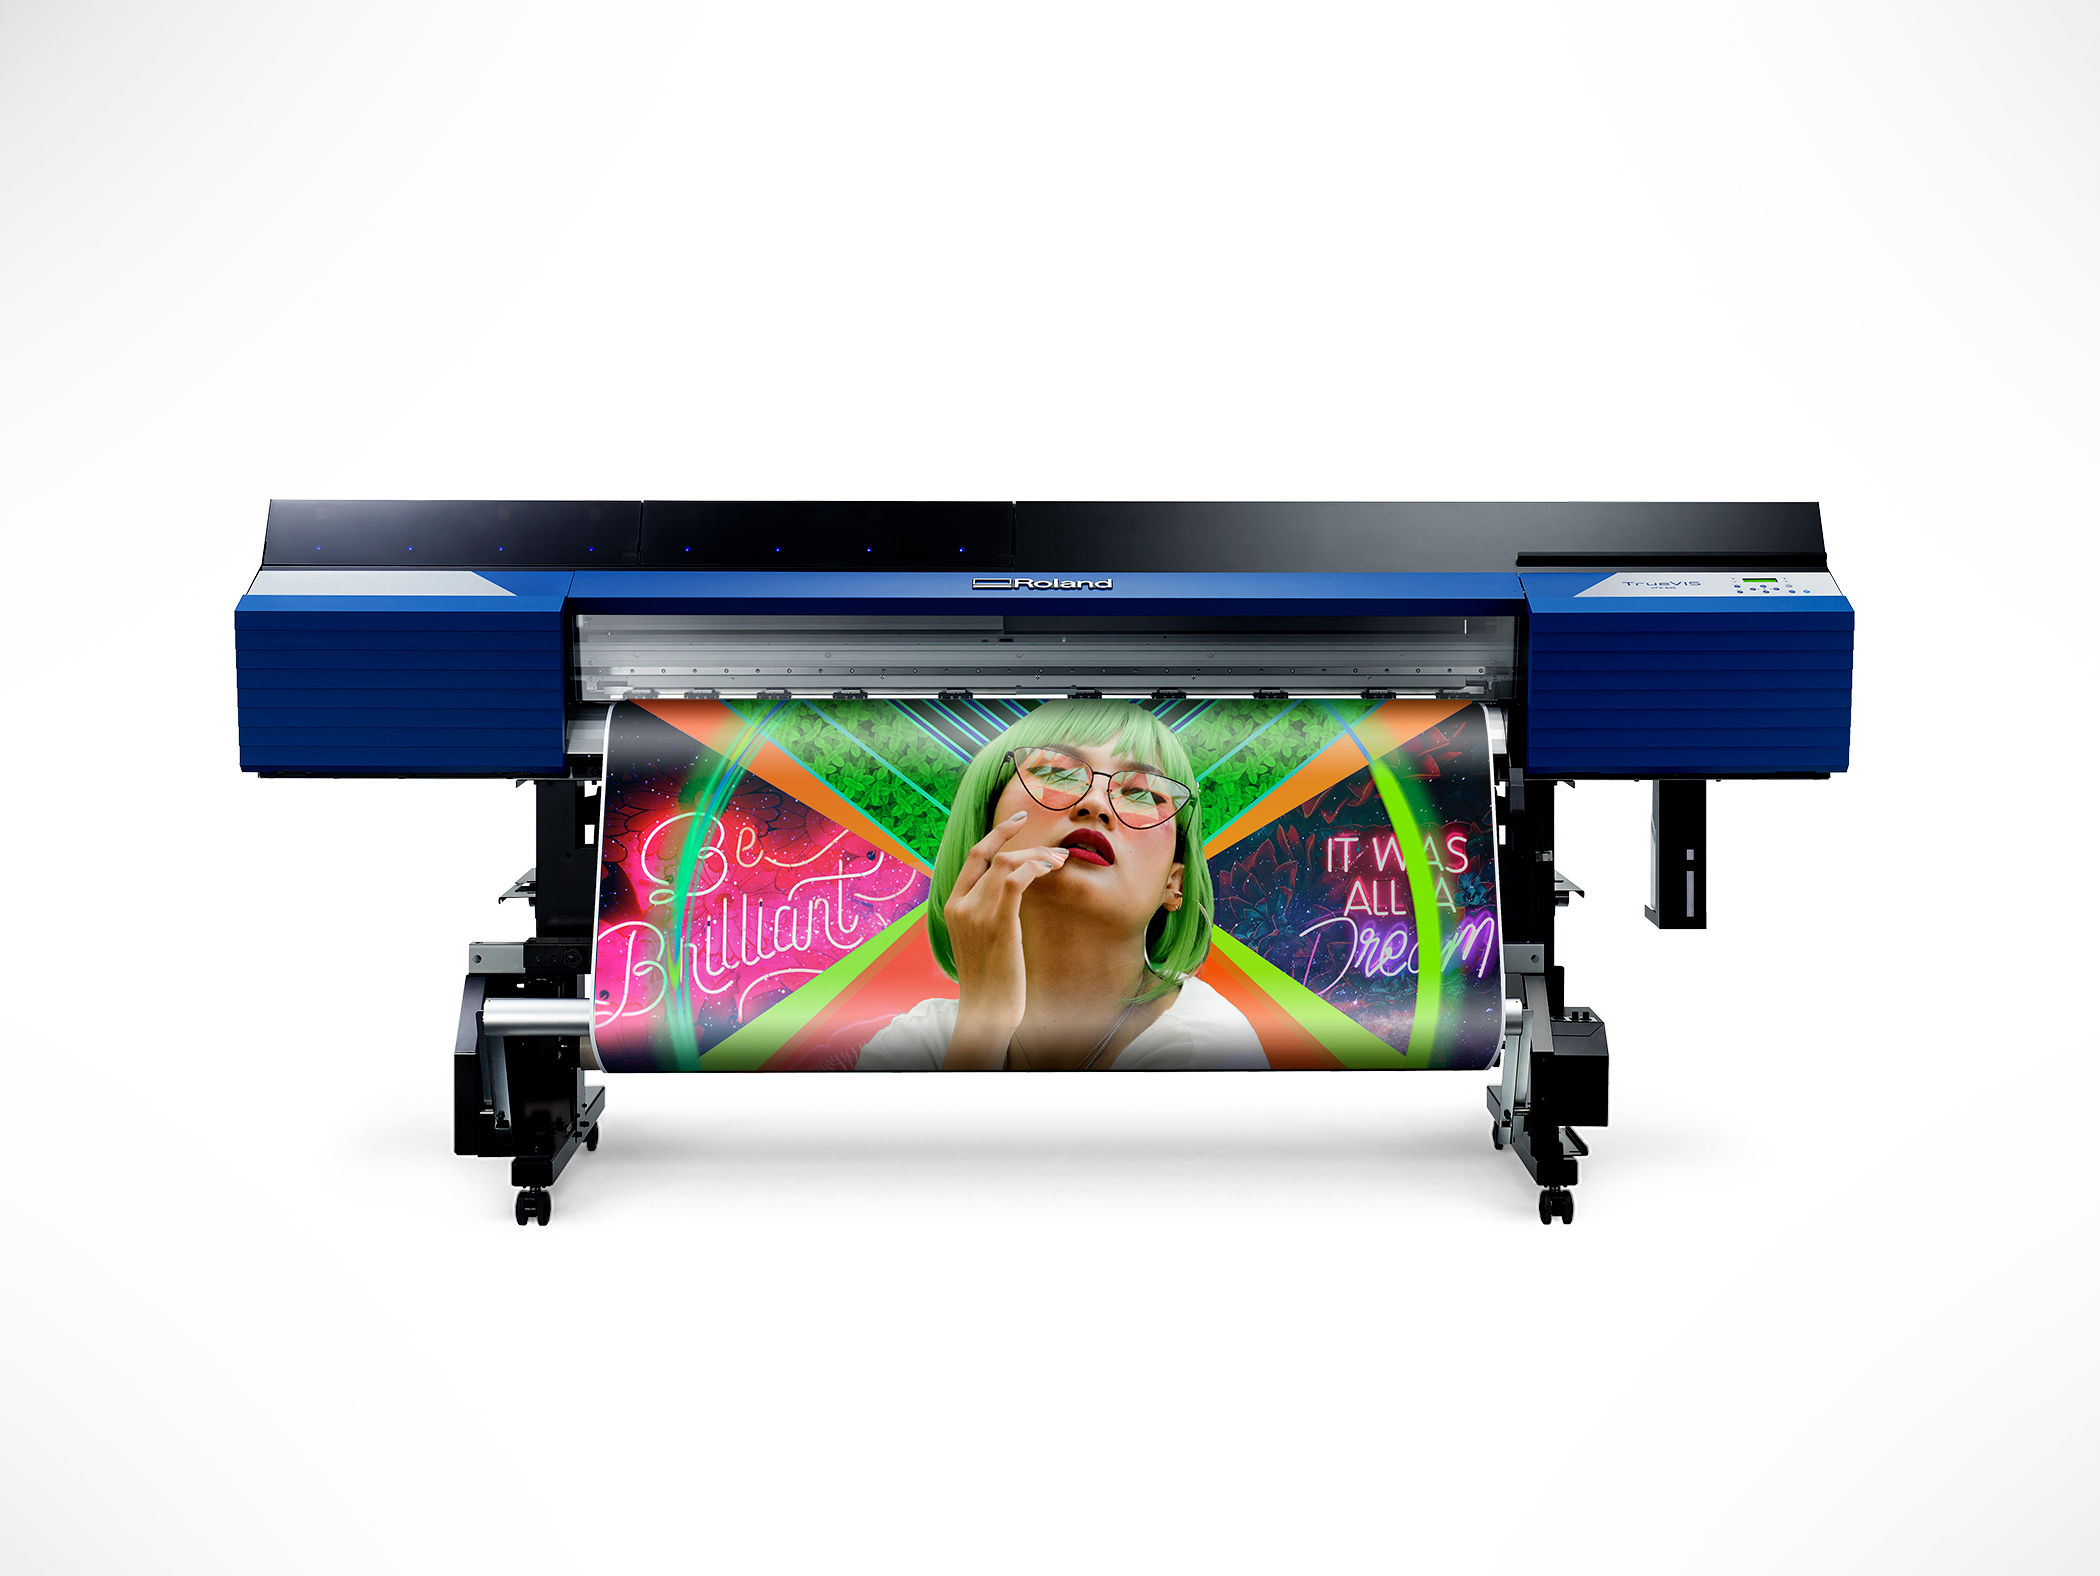 The new Roland DG TrueVIS VF2-640 wide-format printer